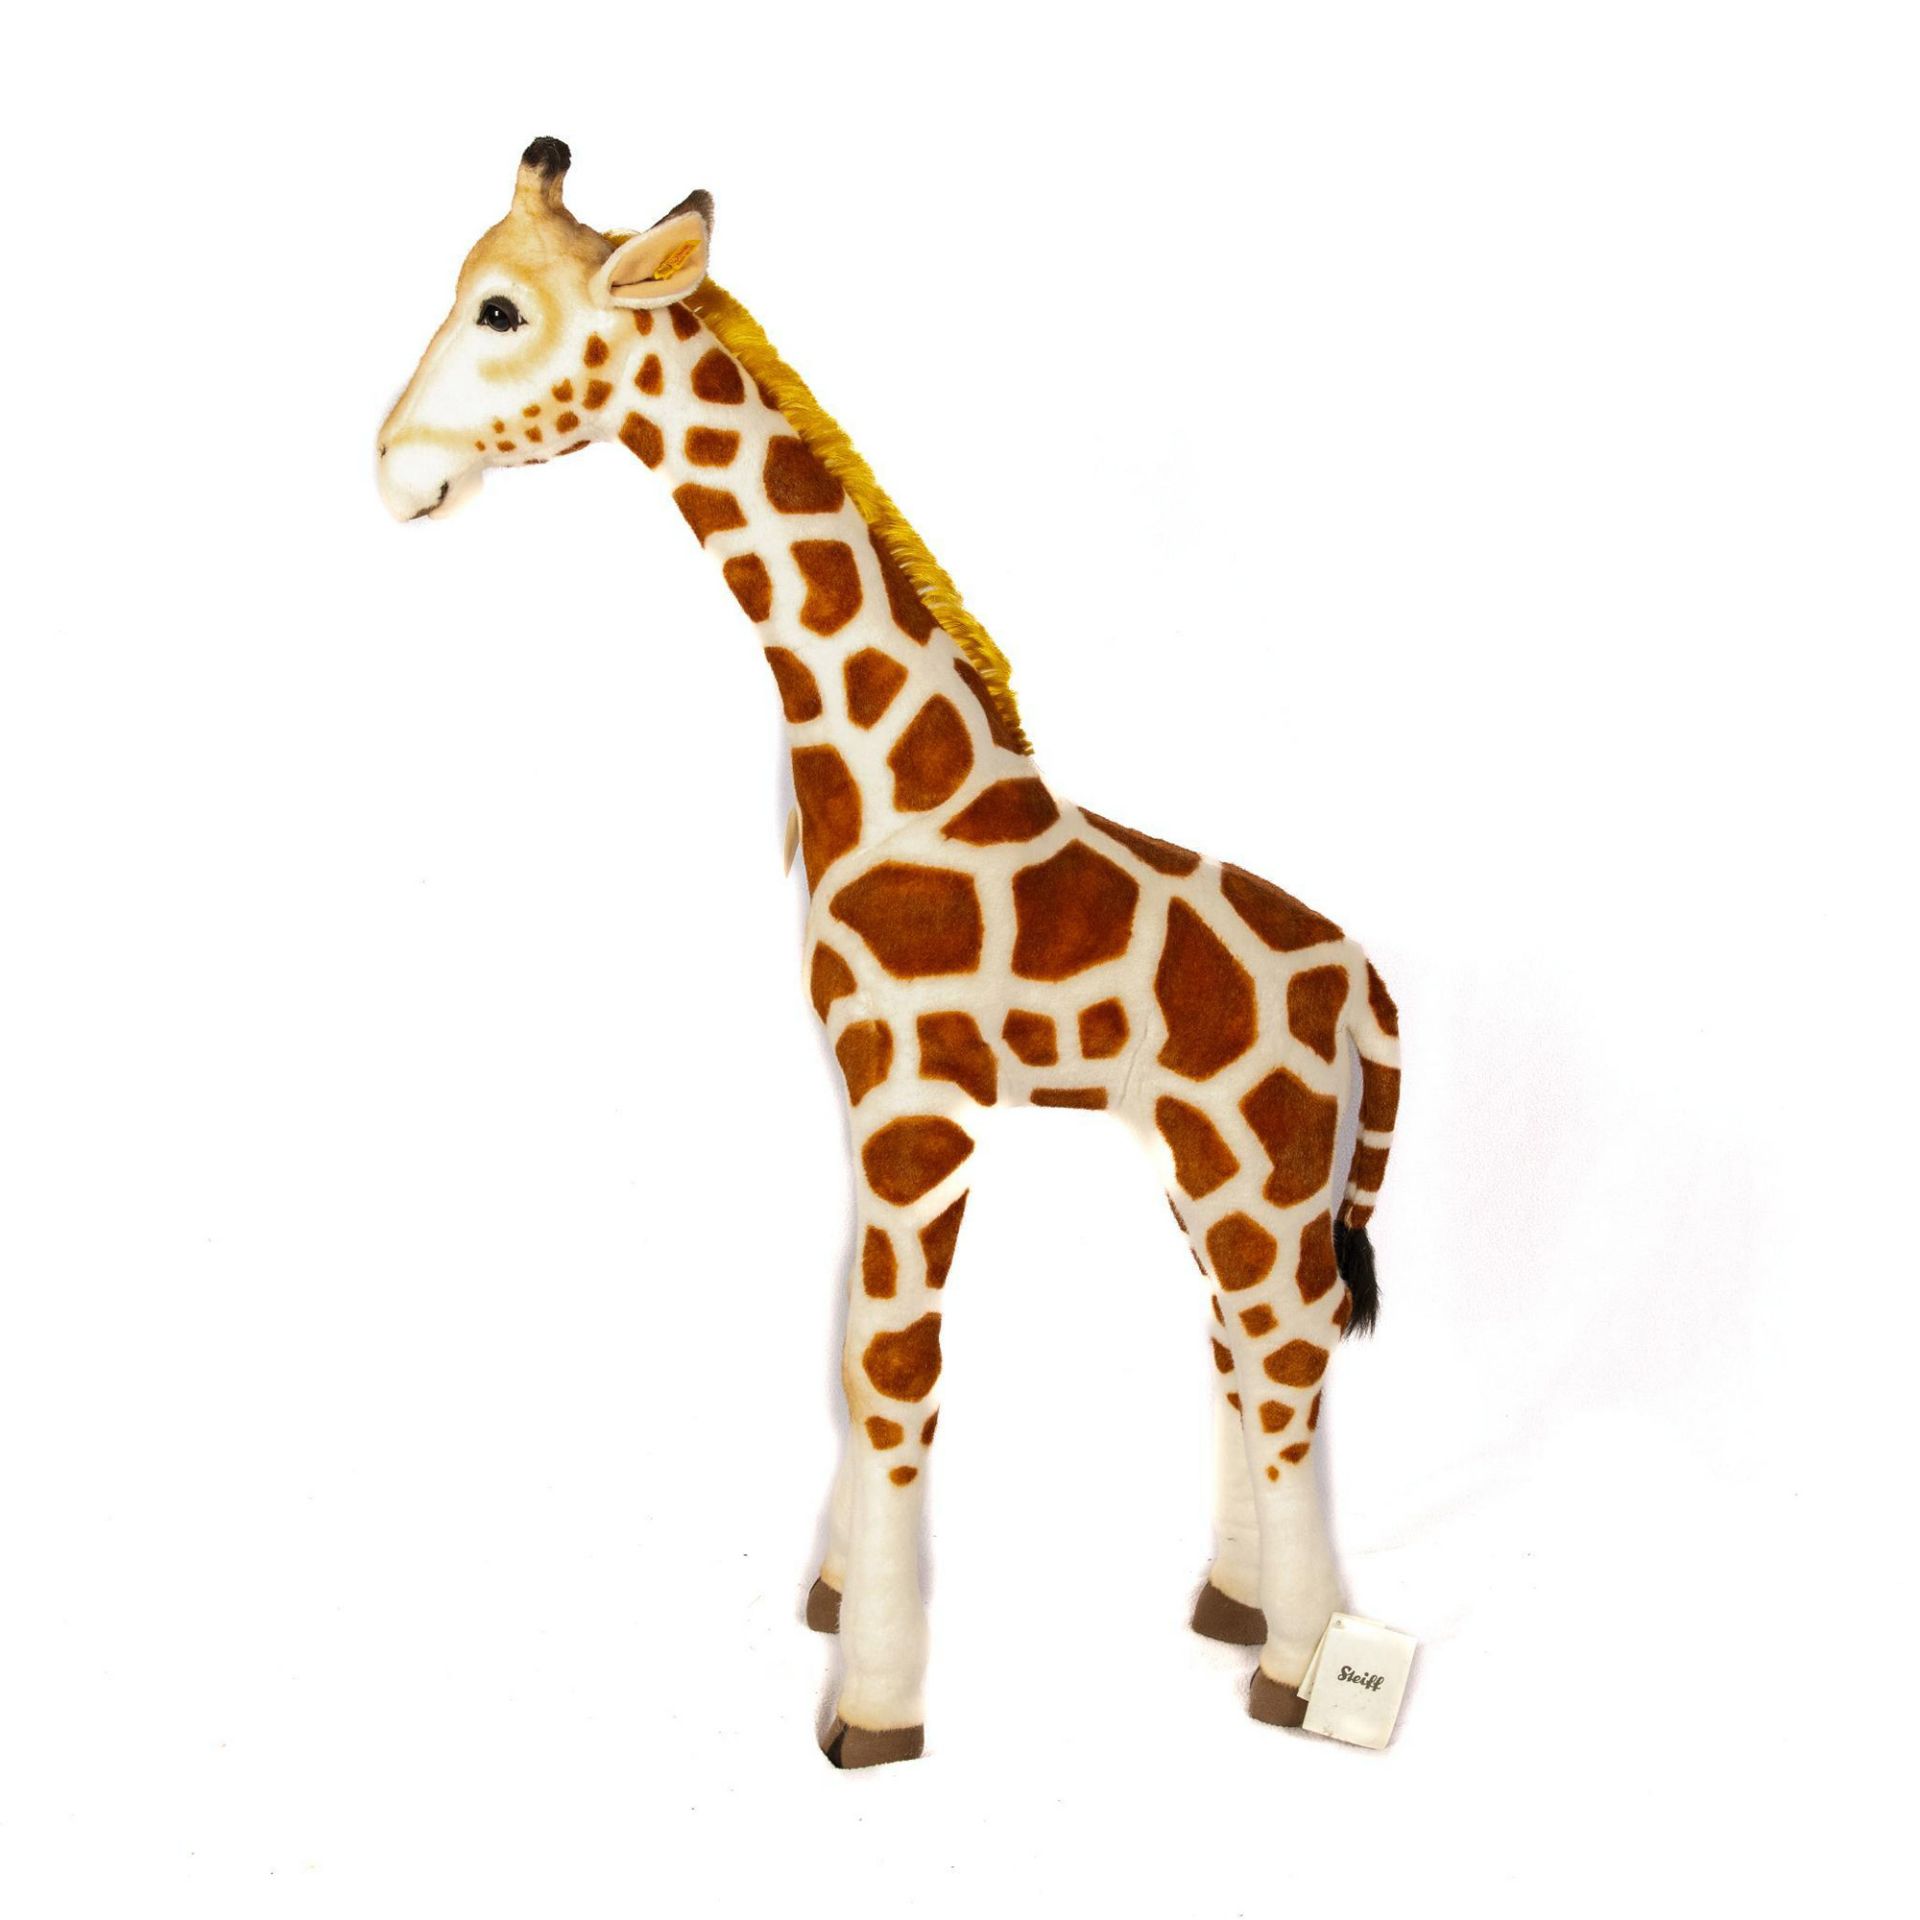 Steiff Stuffed Toy, Standing Giraffe - Image 6 of 8